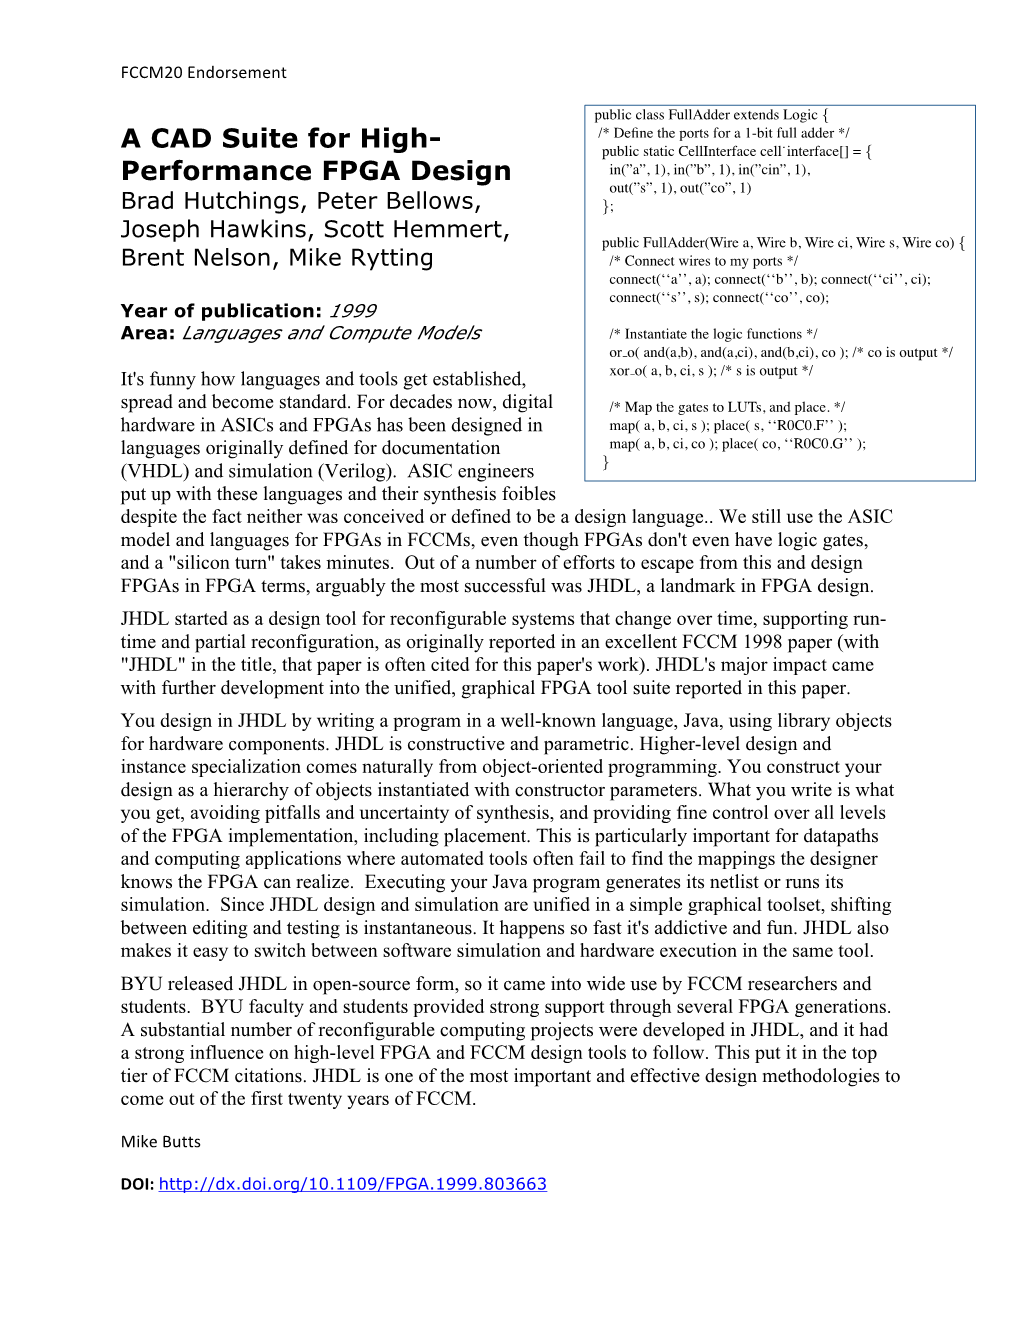 A CAD Suite for High- Performance FPGA Design